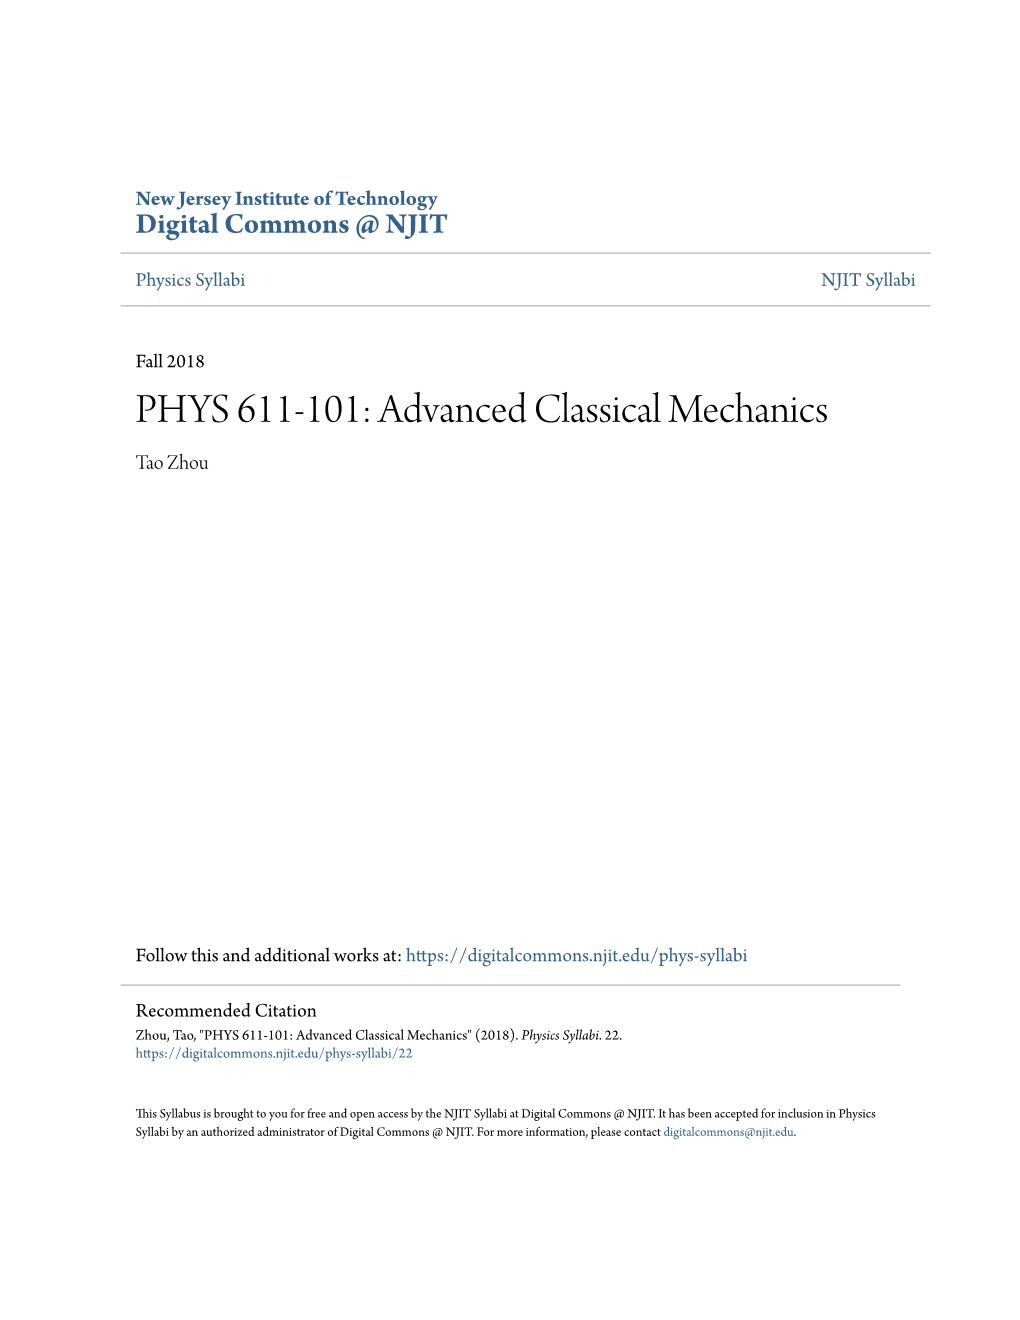 PHYS 611-101: Advanced Classical Mechanics Tao Zhou